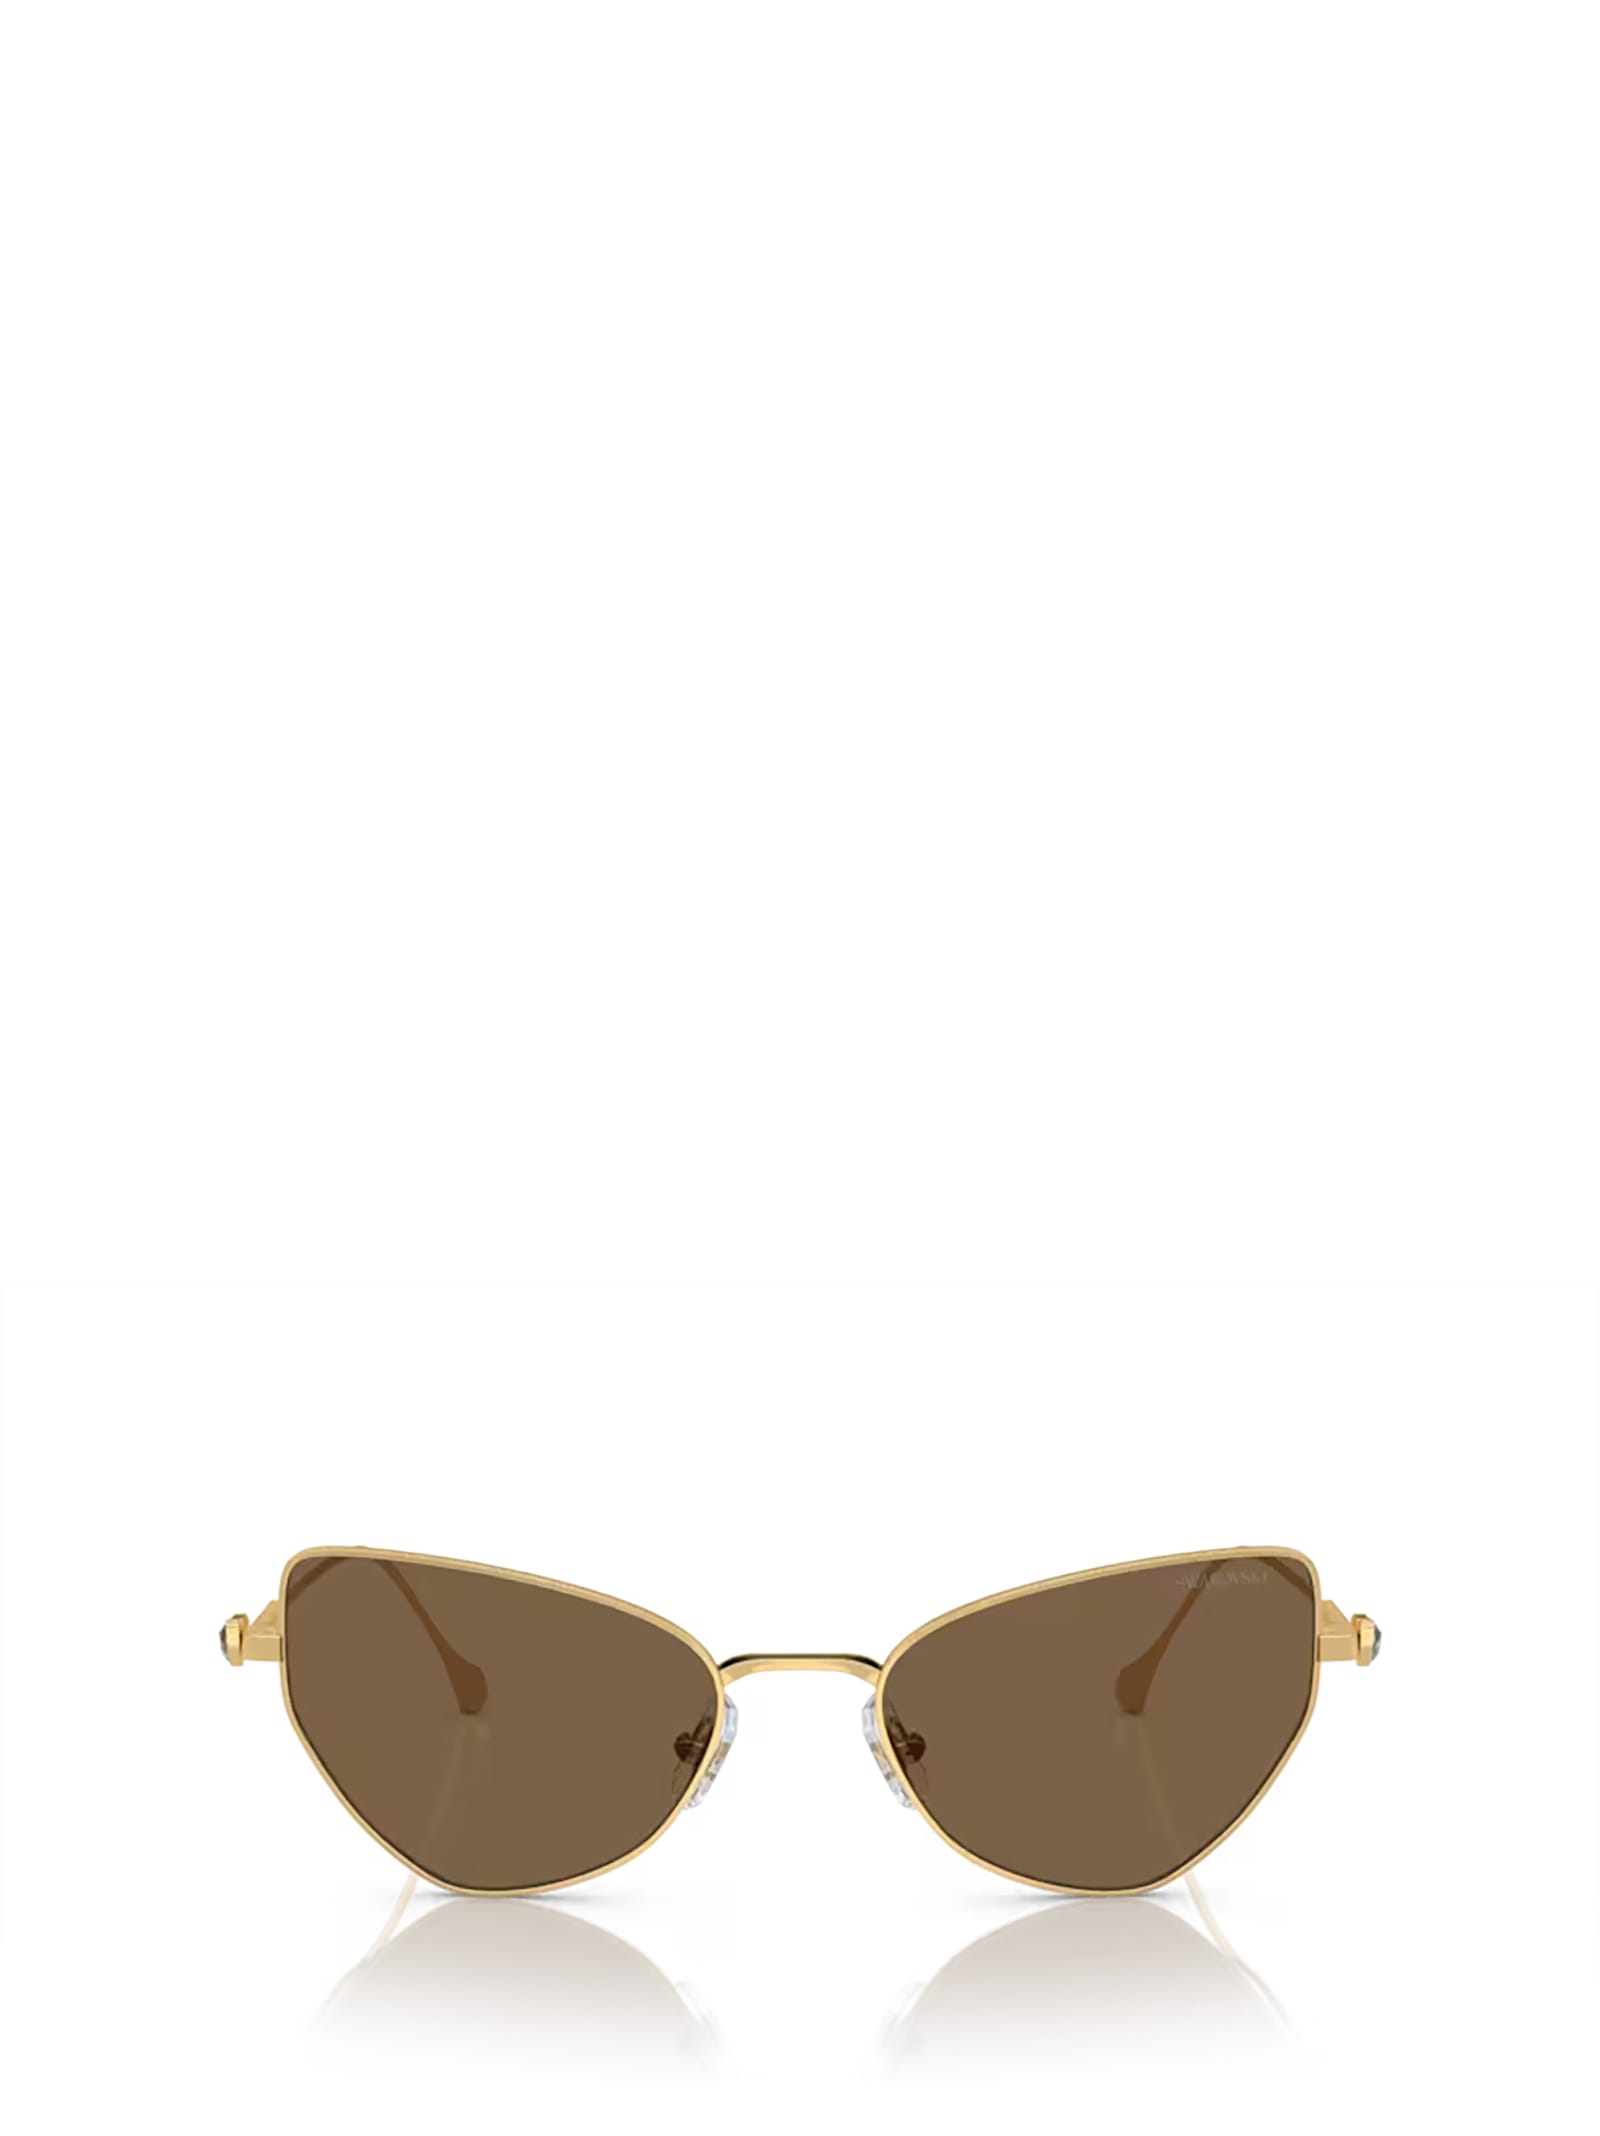 Swarovski Sk7011 Gold Sunglasses